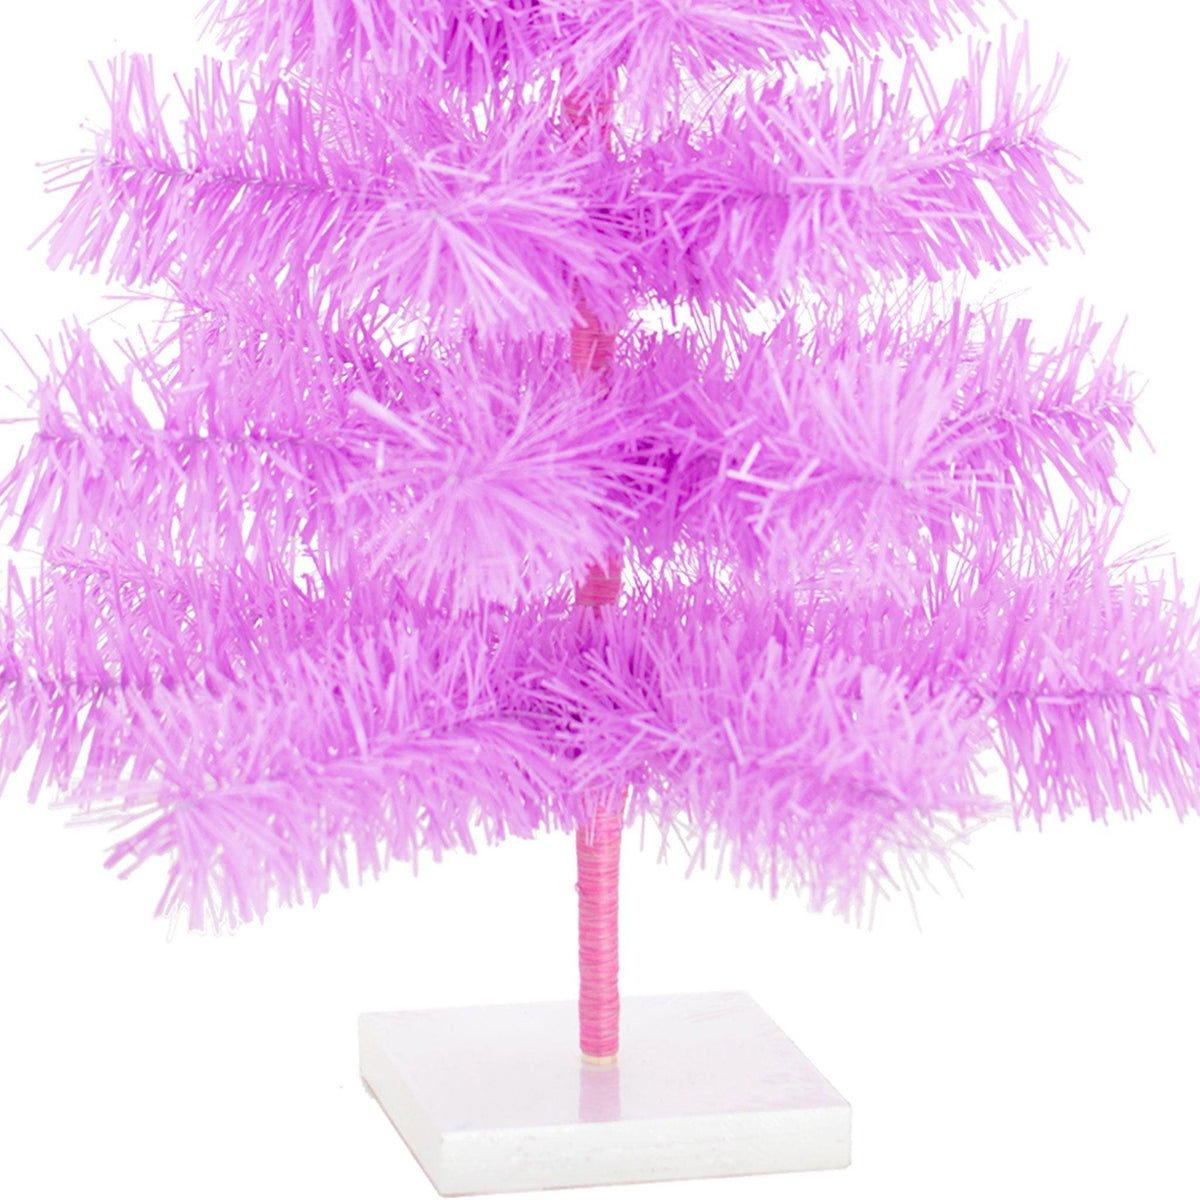 Lee Display's brand new Lavender colored Tinsel Christmas Trees on sale now at leedisplay.com